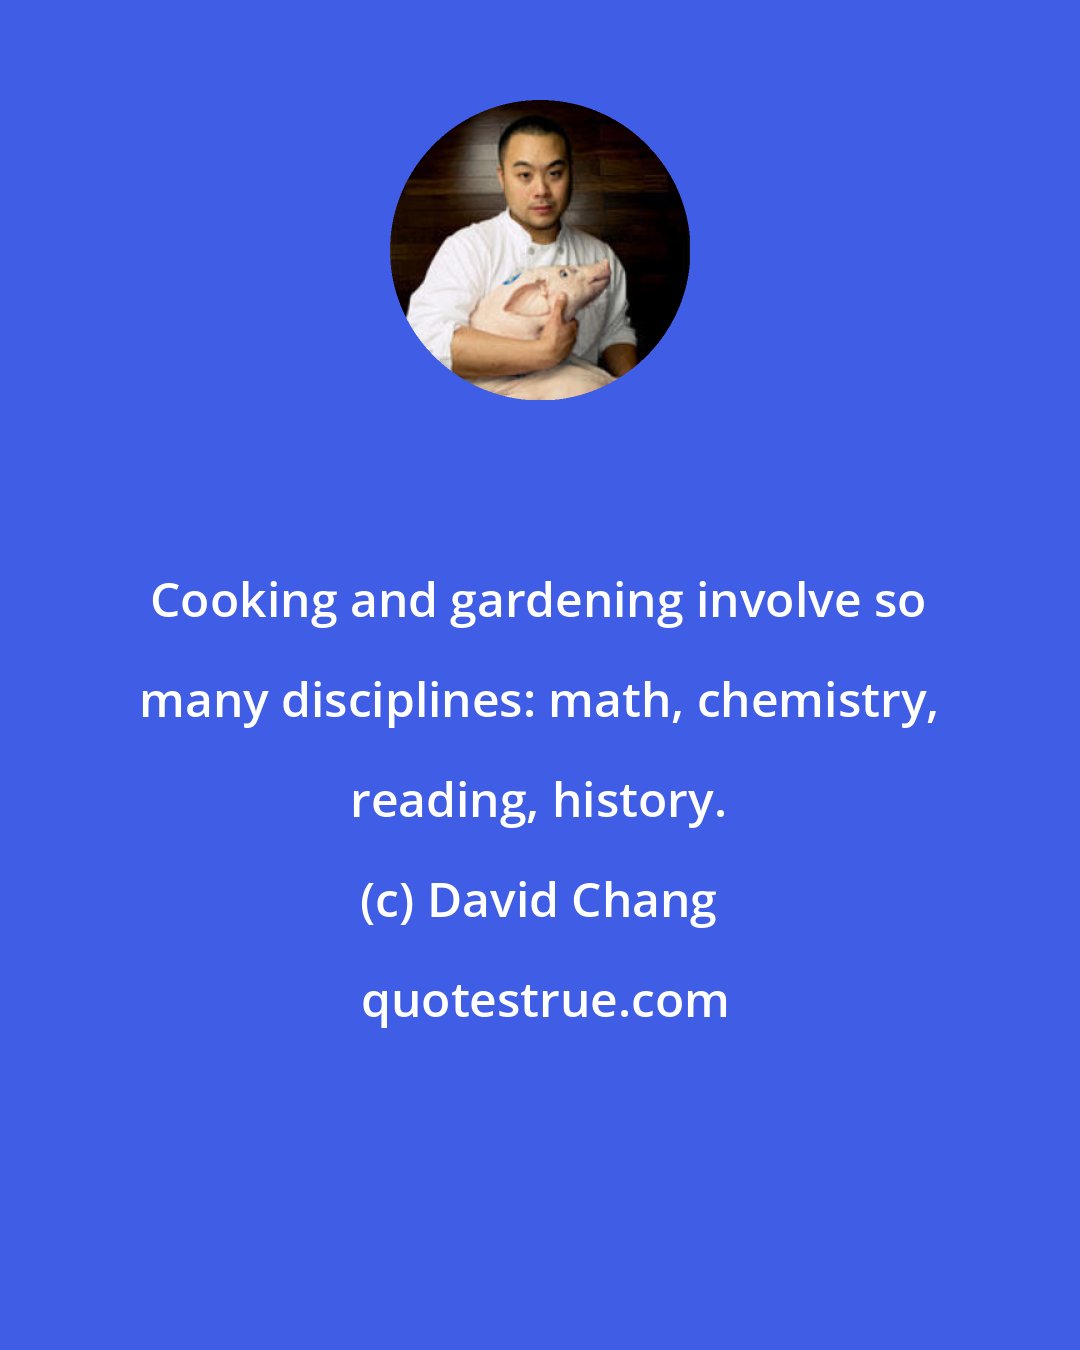 David Chang: Cooking and gardening involve so many disciplines: math, chemistry, reading, history.